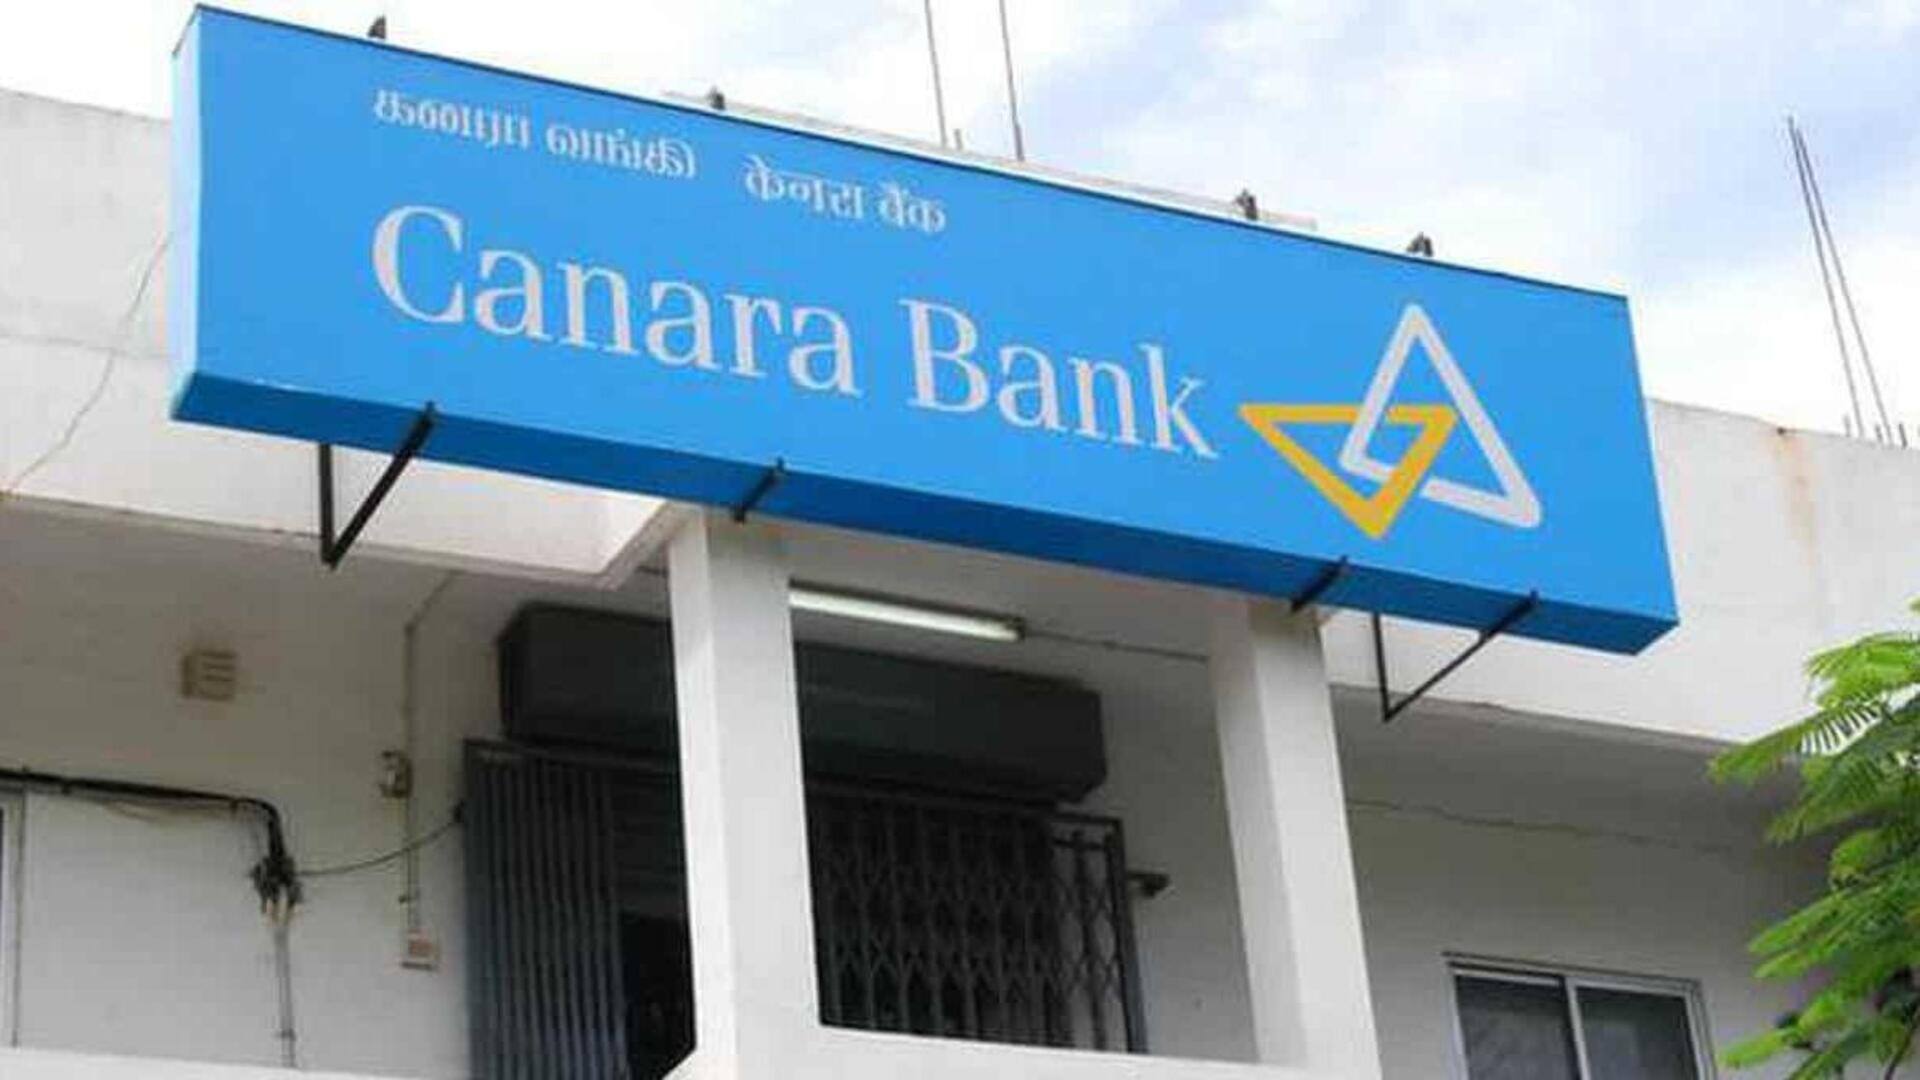 Canara Bank's Q2 net profit climbs 43% to Rs. 3,606cr